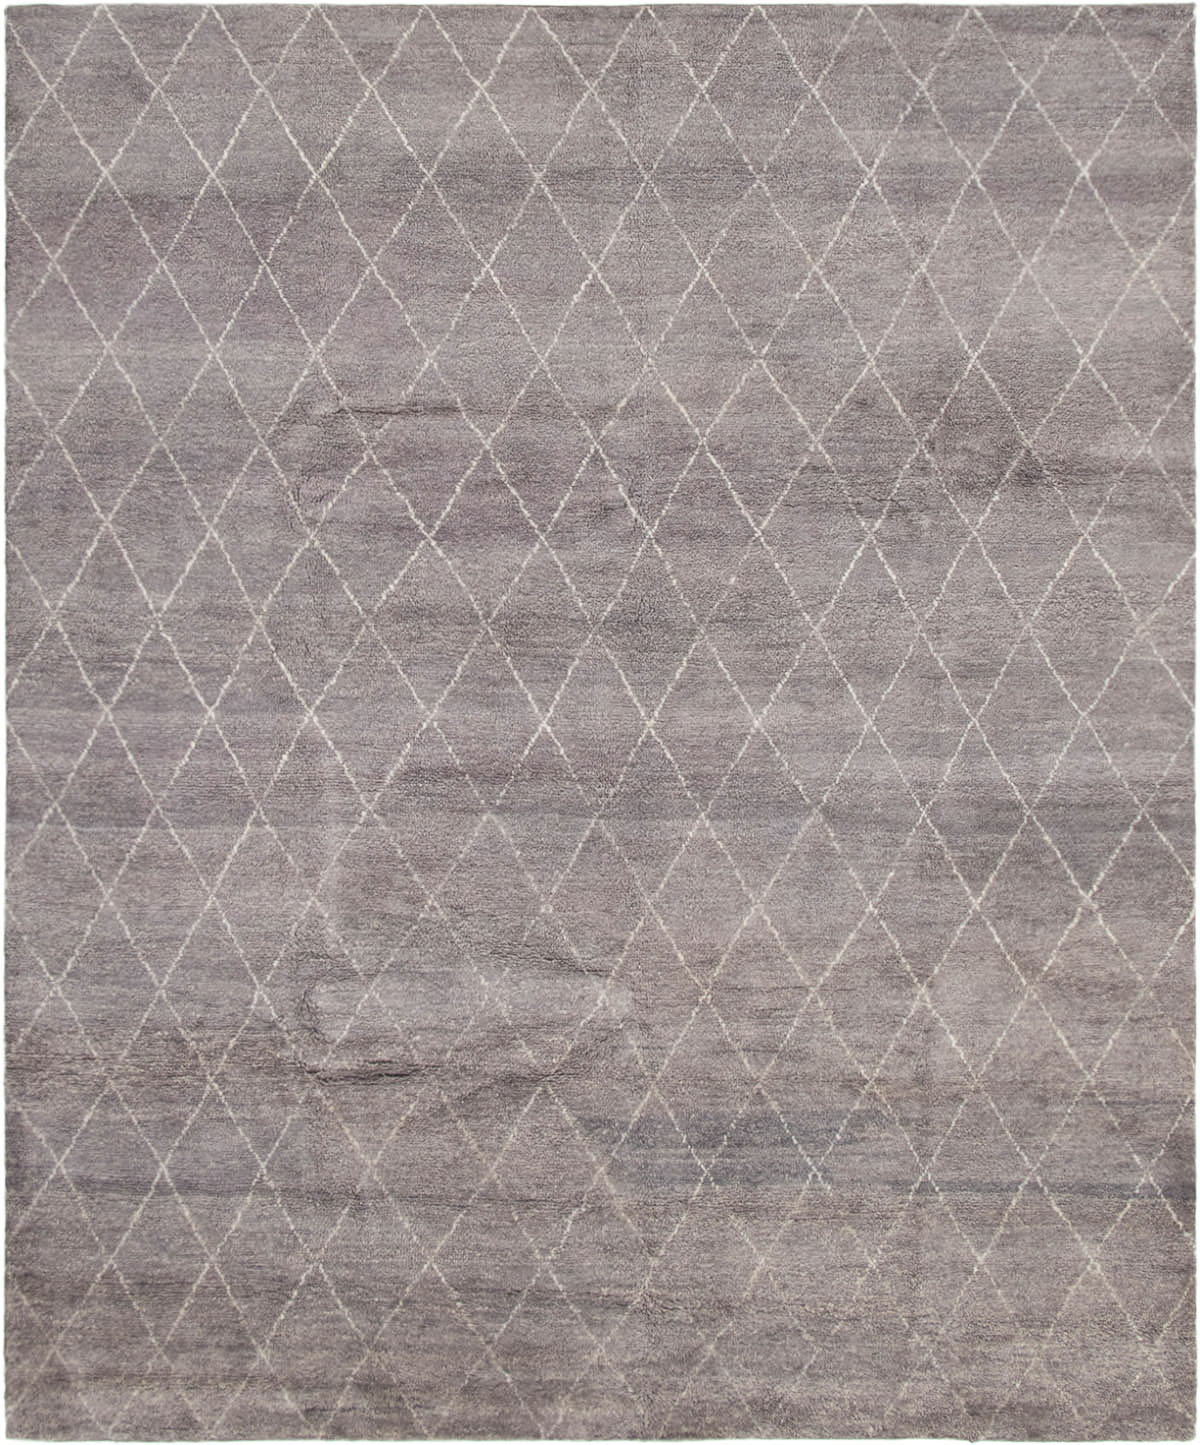 Hand-knotted Arlequin Dark Grey Wool Rug 8'6" x 10'3" Size: 8'6" x 10'3"  